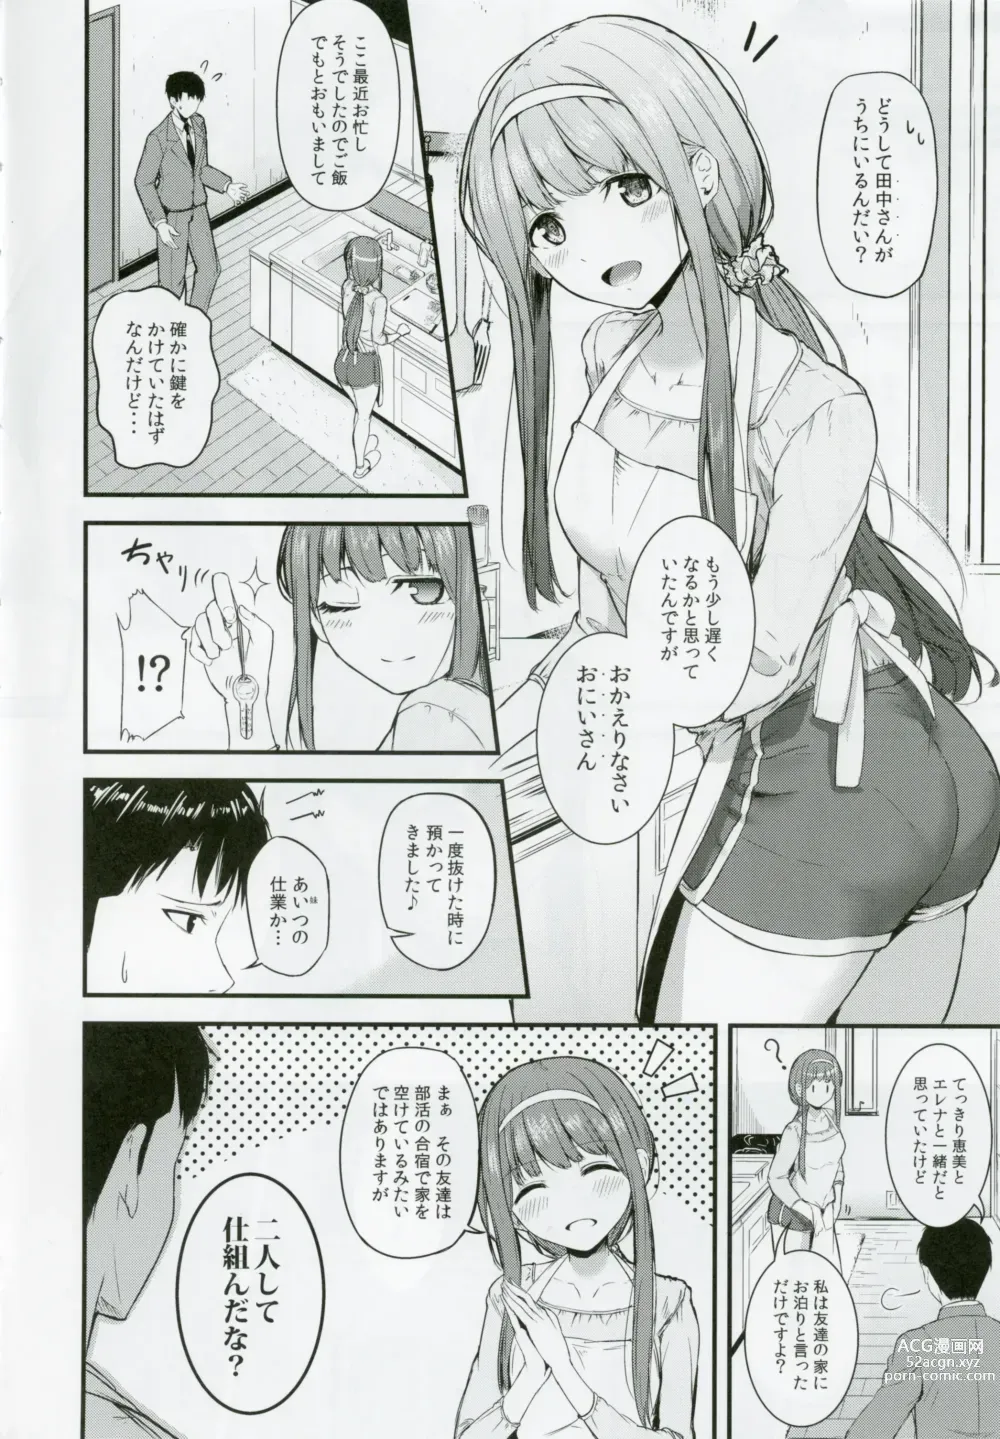 Page 5 of doujinshi Smile me tender